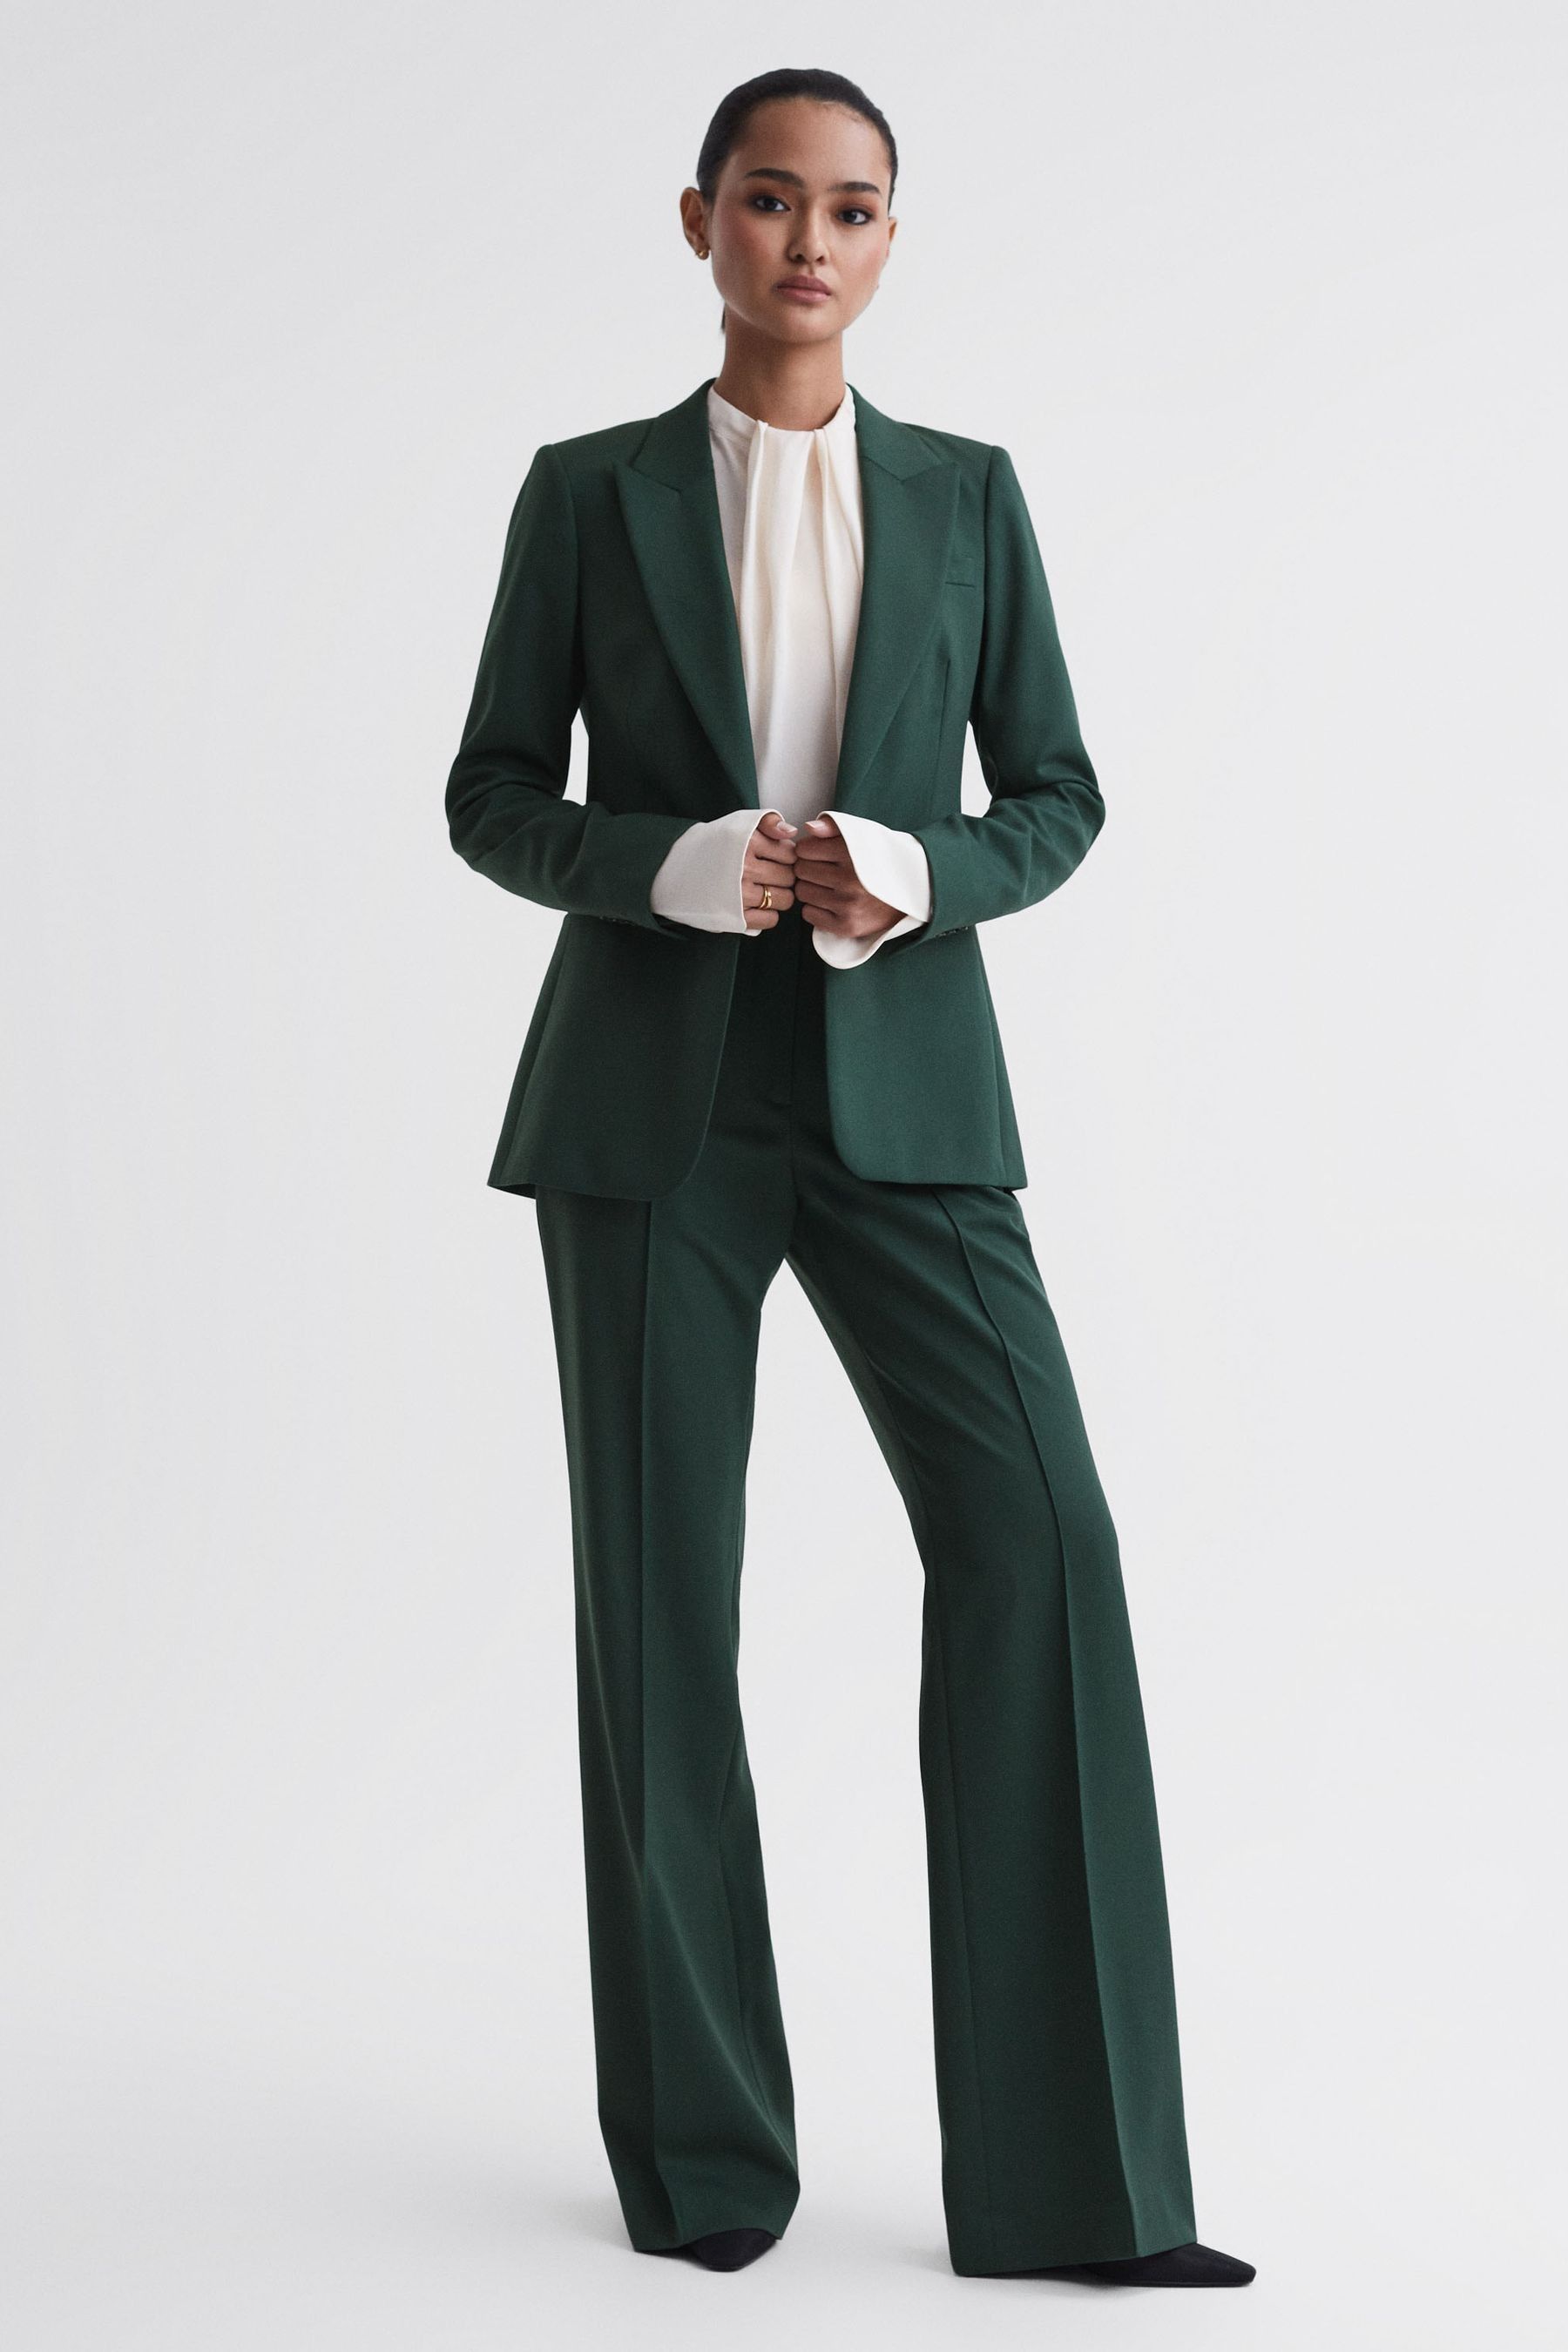 Reiss Jade - Bottle Green Petite Tailored Fit Single Breasted Suit Blazer, Us 6